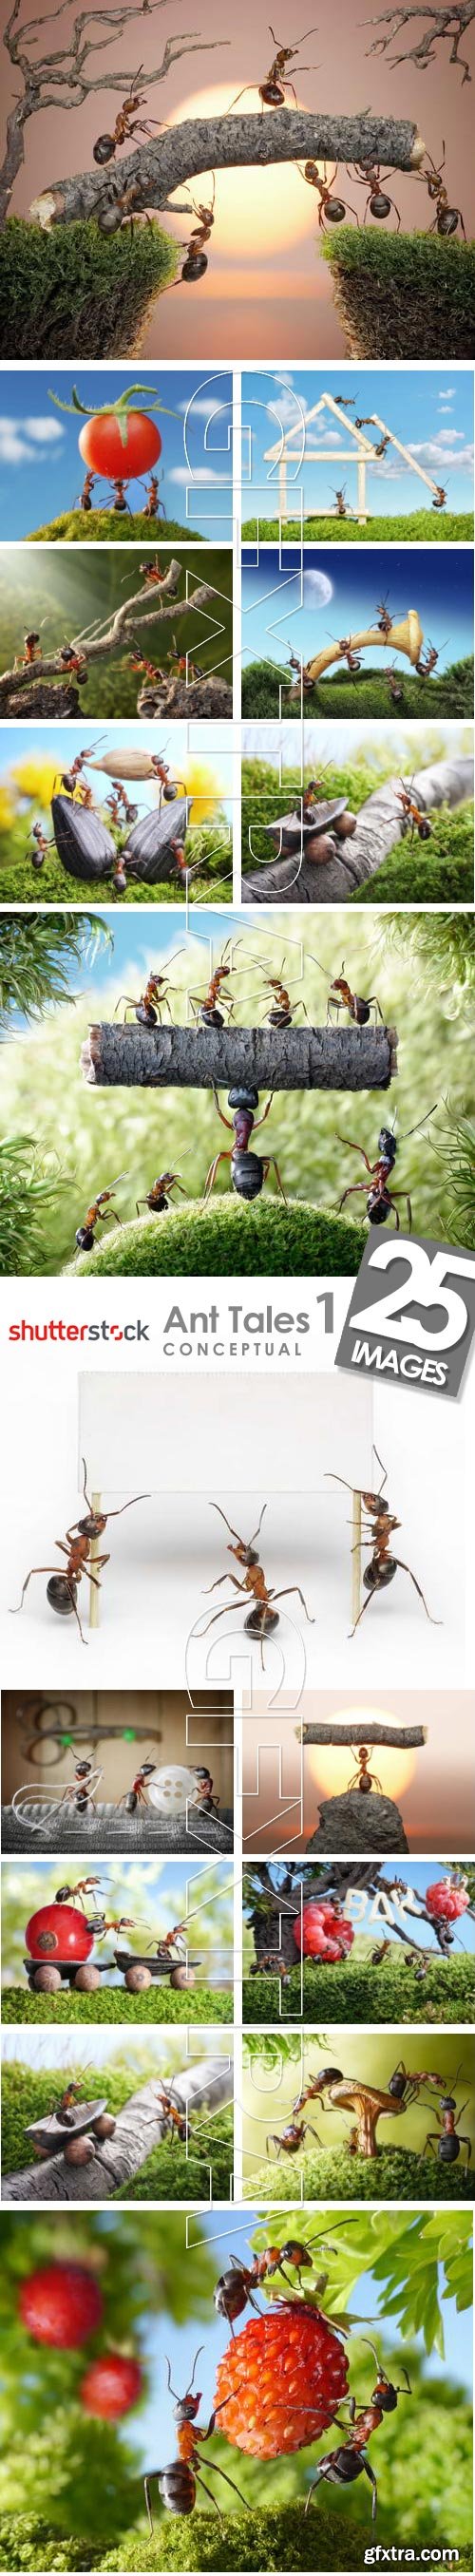 Ant Tales - Conceptual Photo Art 25xJPG